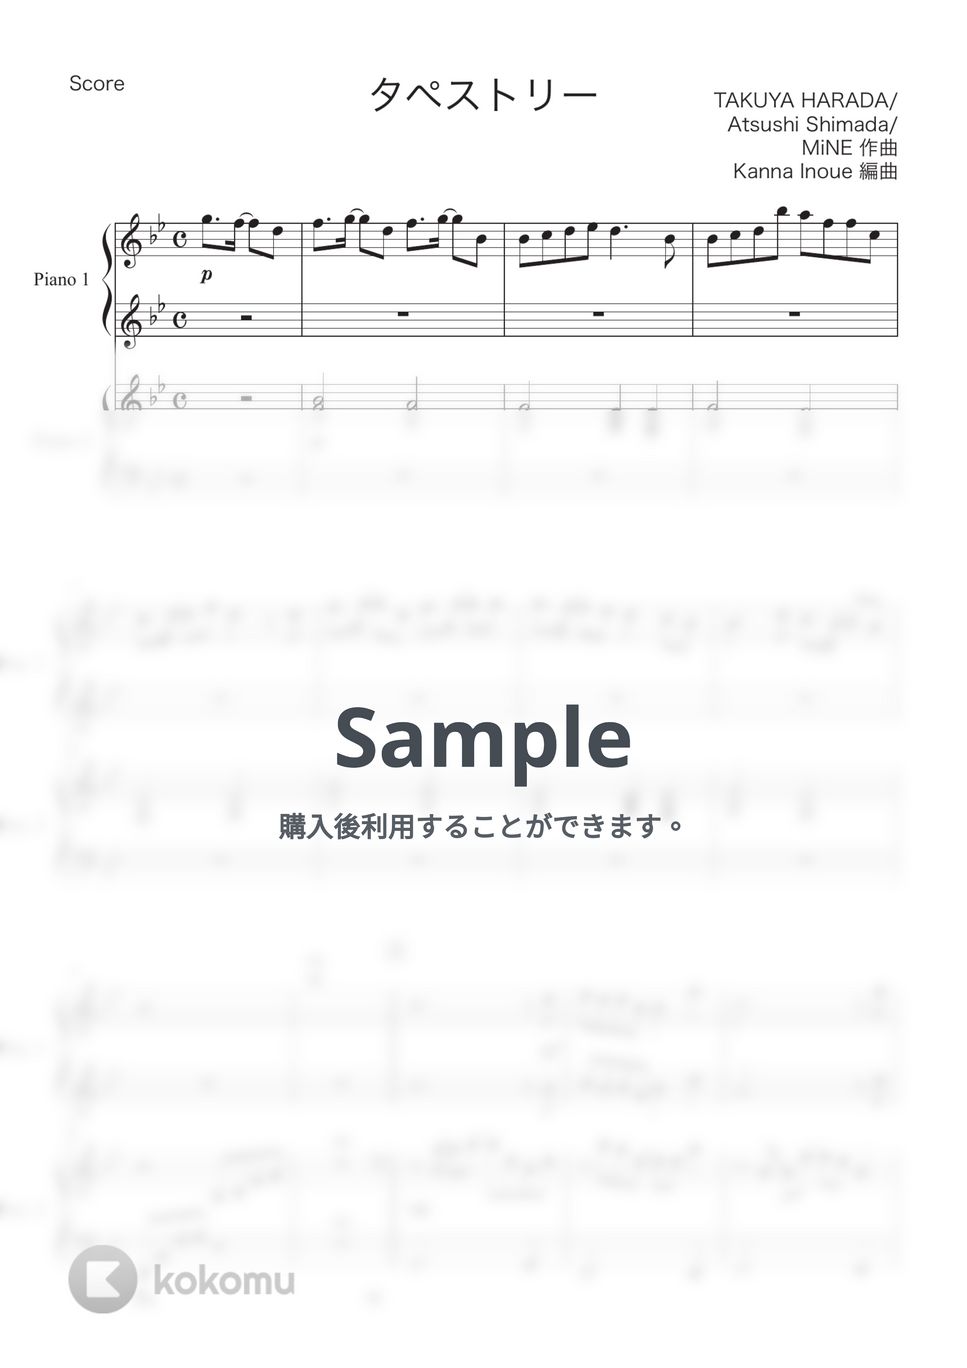 Snow Man - タペストリー (ピアノ連弾 / 初級 / 『わたしの幸せな結婚』主題歌) by Kanna Inoue